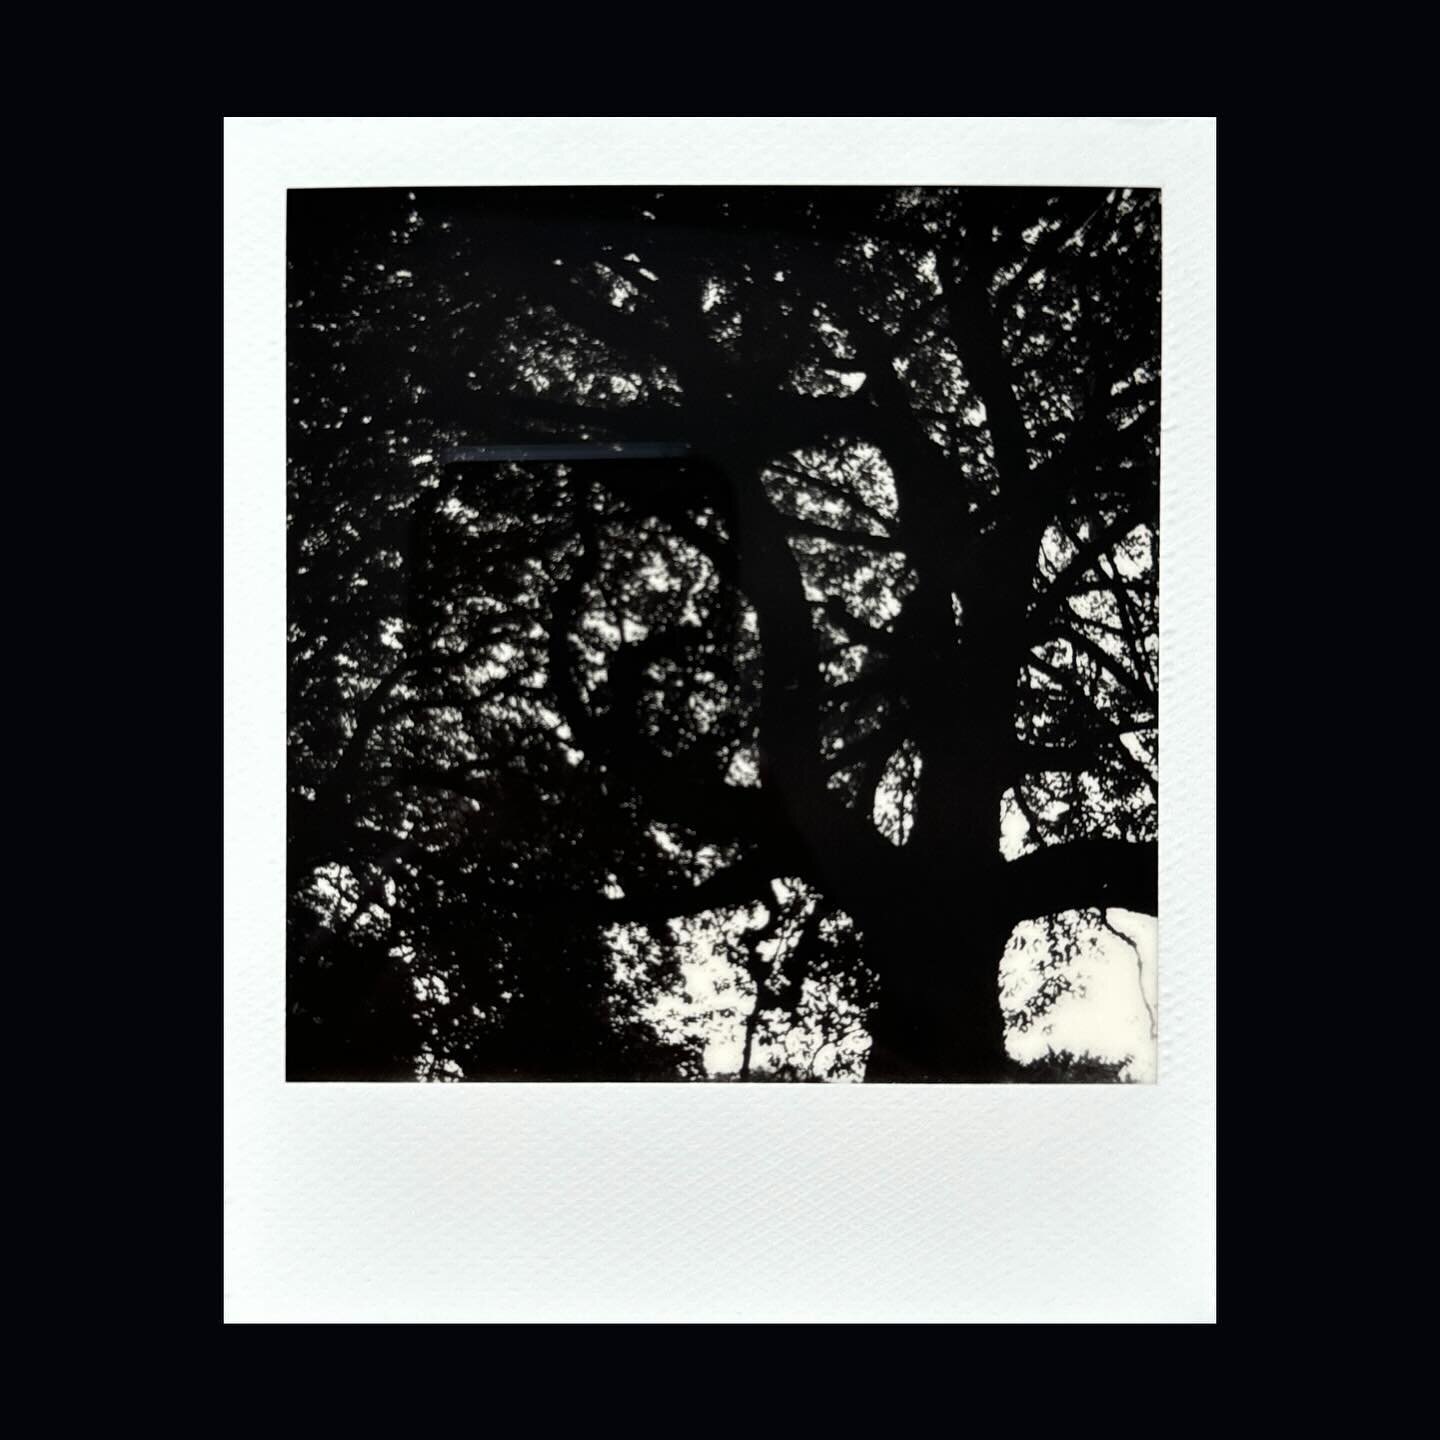 SOME TREES
&bull;
&bull;
&bull;
#tree #london #urbanadventures #monochrome #blackandwhite #polaroid #polaroidi2 #itypefilm #adventuresinmonochrome #monochroman